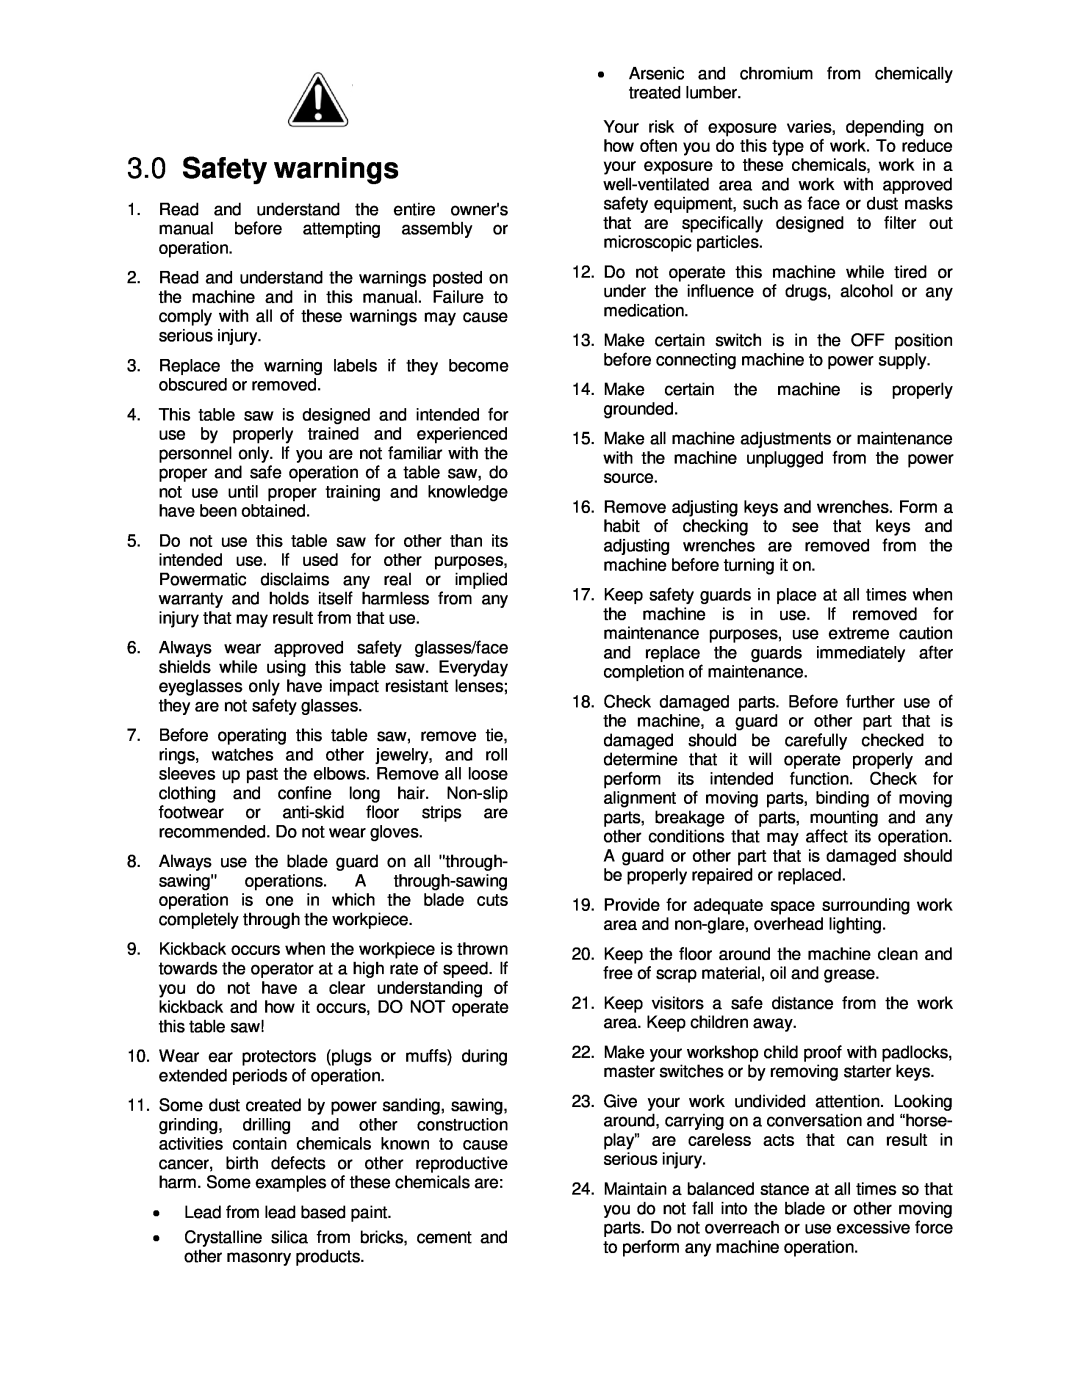 Powermatic 64B operating instructions Safety warnings 